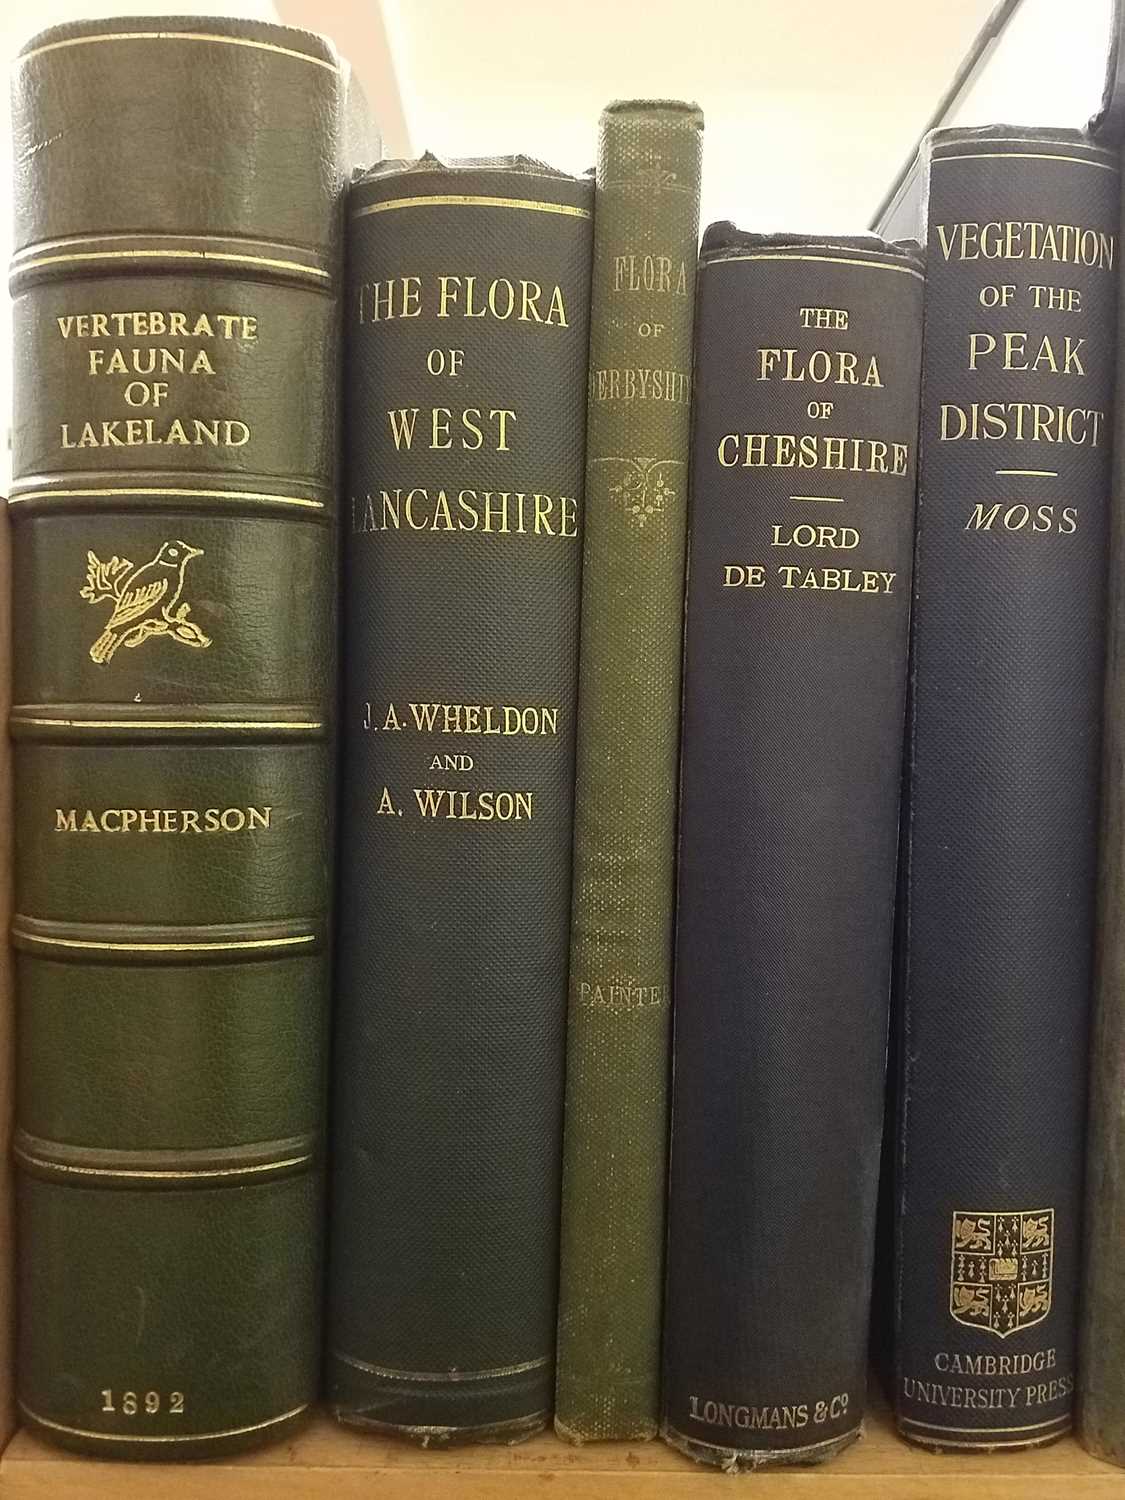 Lot 99 - Macpherson (H. A.). A Vertabrate Fauna of Lakeland..., Edinburgh: David Douglas, 1892